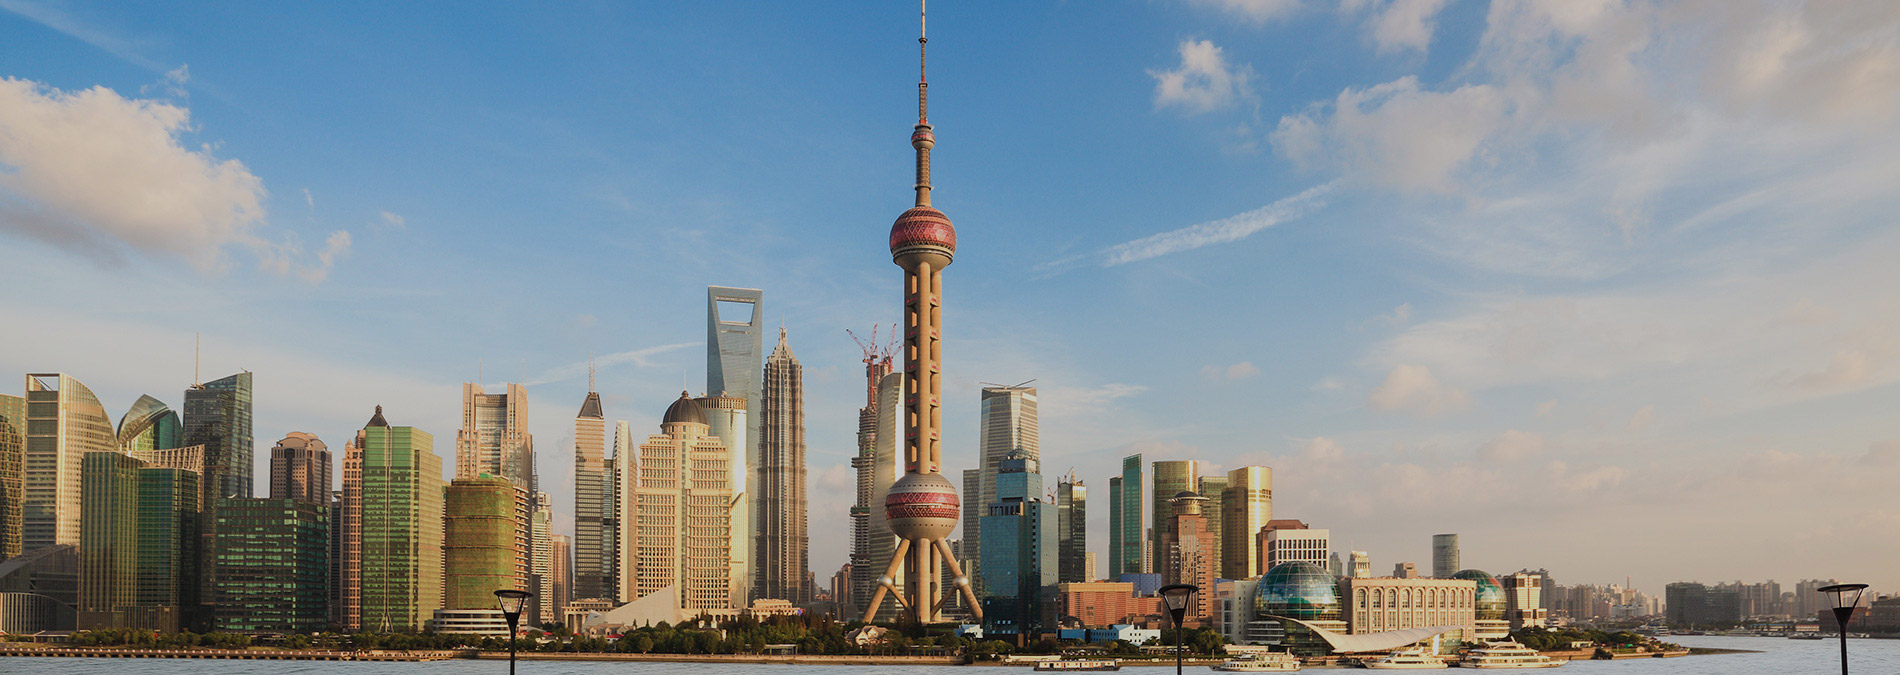 oriental pearl shanghai skyline